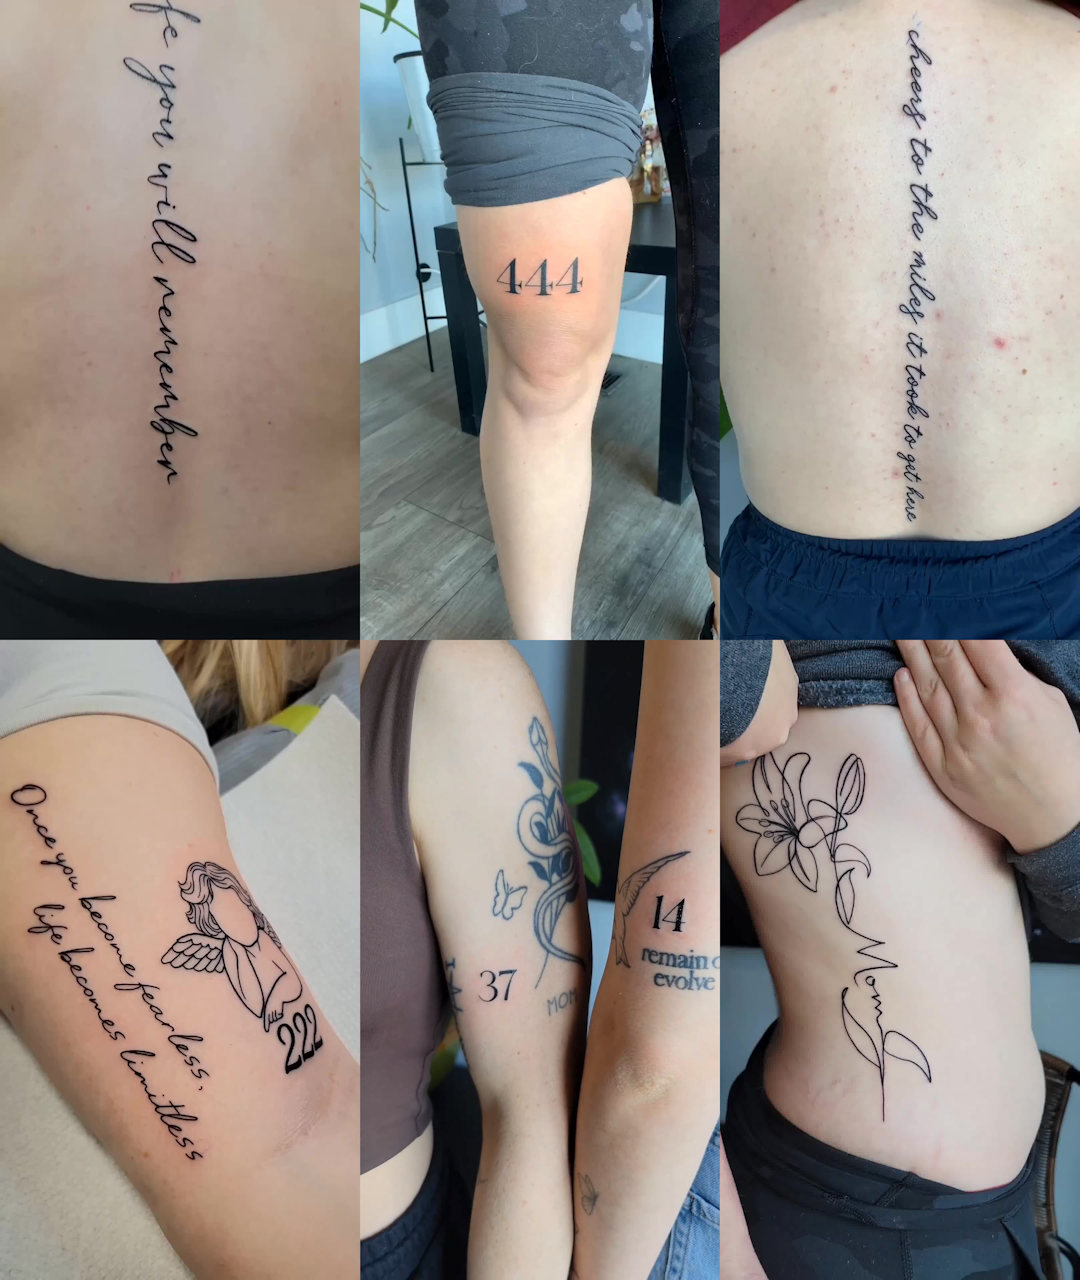 Some Recent Script Tattoos — Brooke Middleton